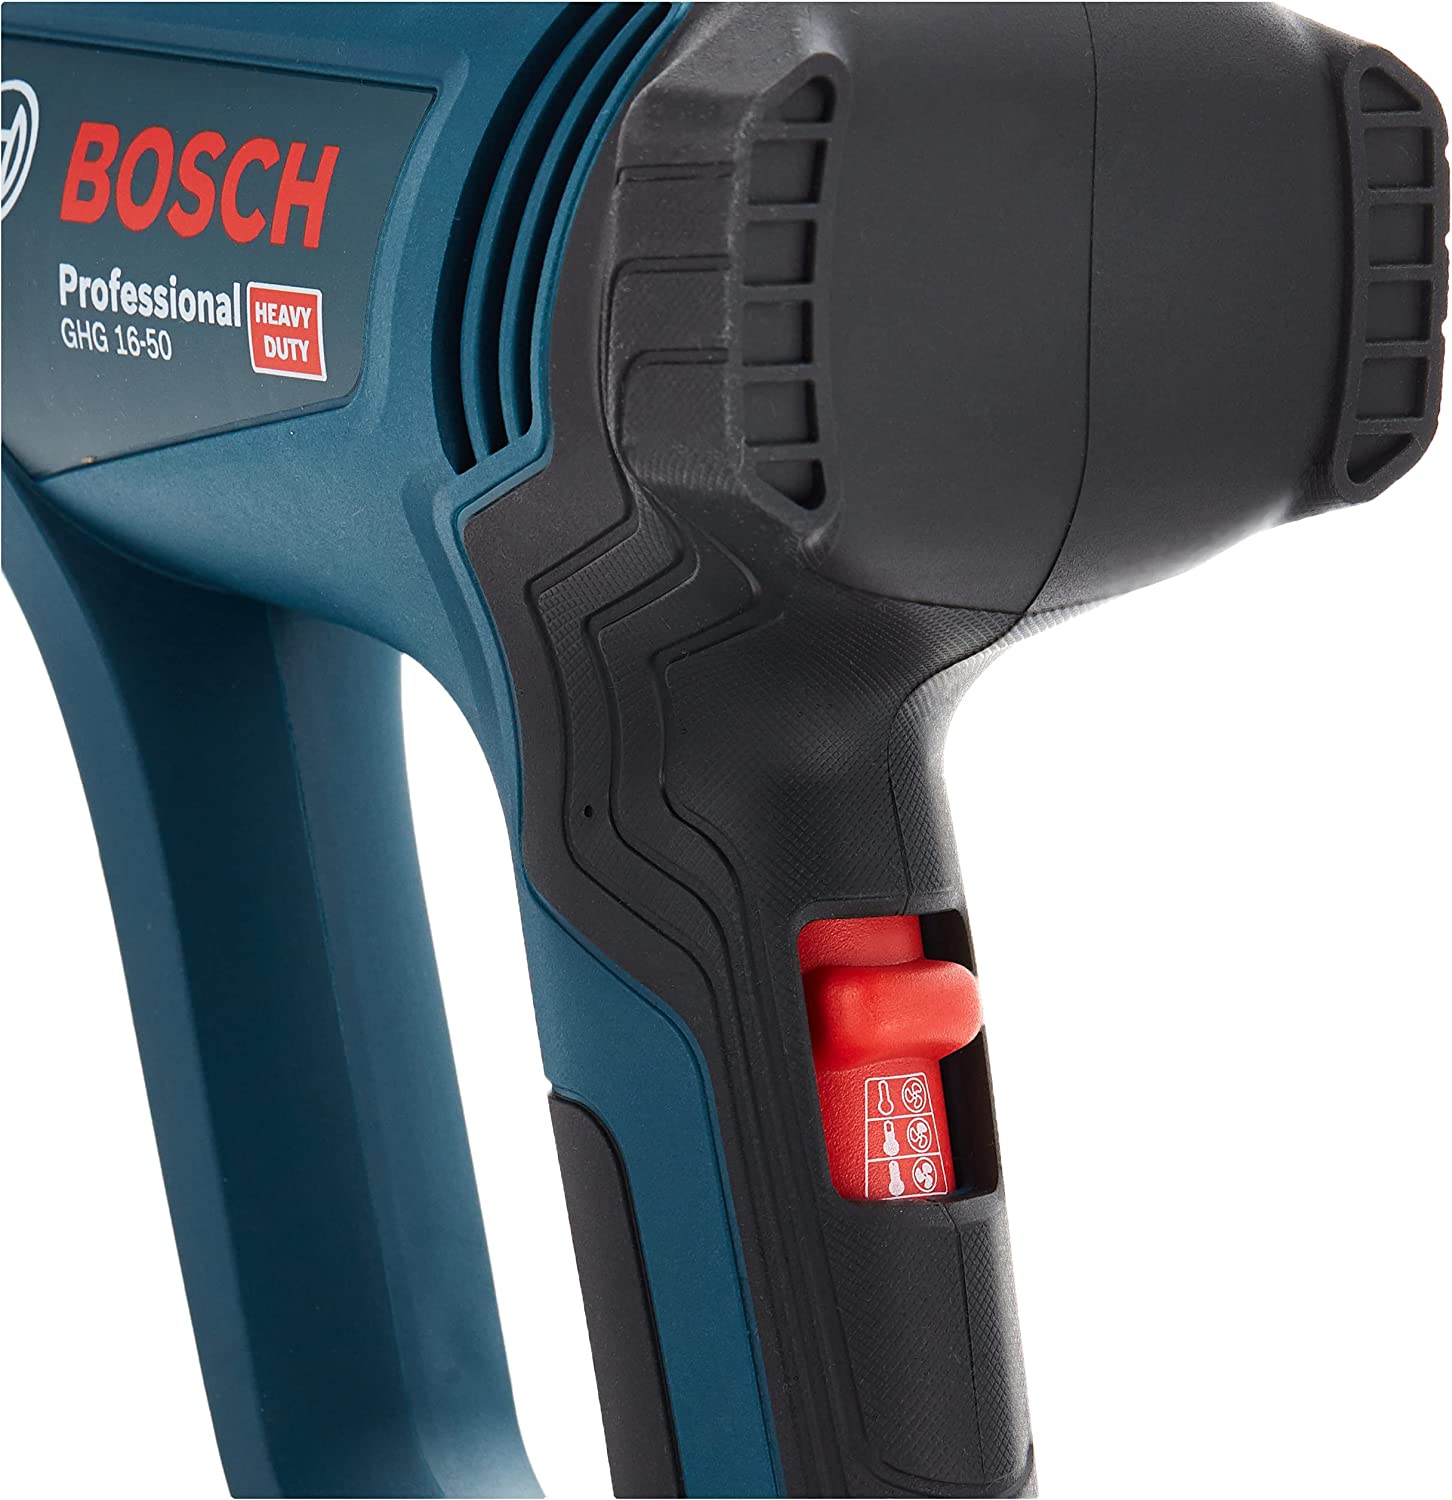 Bosch Heat gun (JE0 601 2A6 0L0)